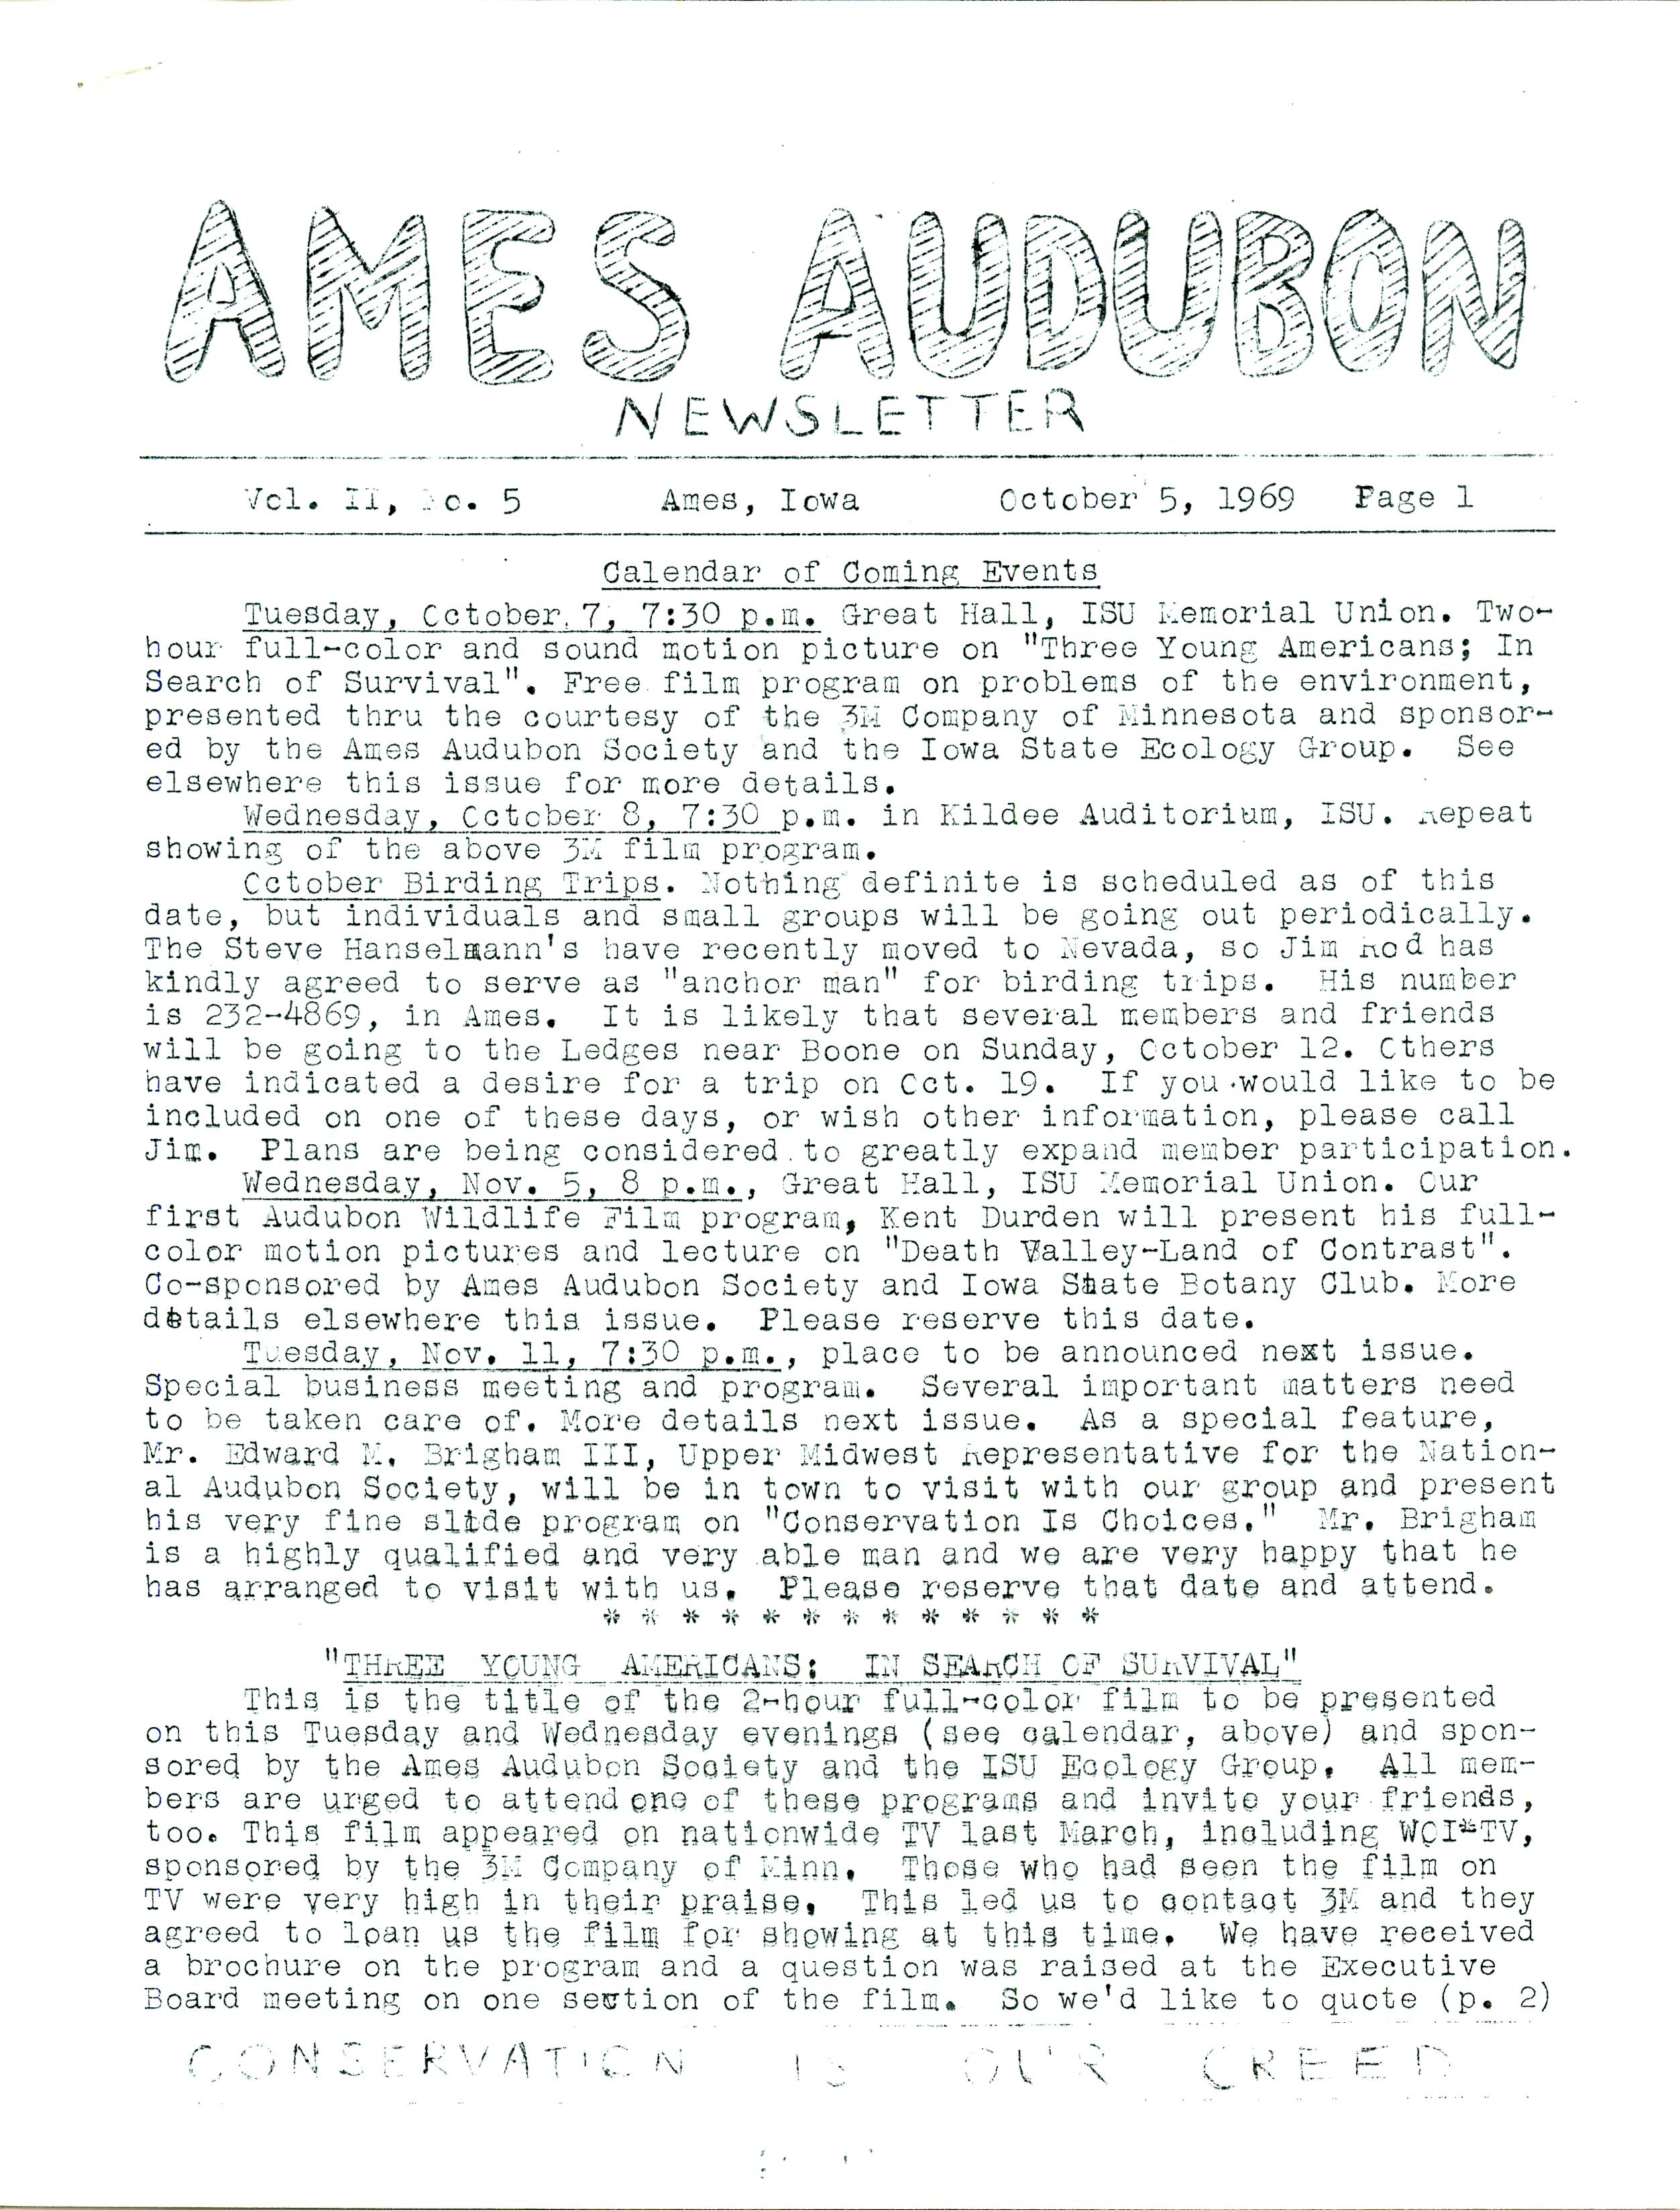 Ames Audubon Newsletter, Volume 2, Number 5, October 5, 1969